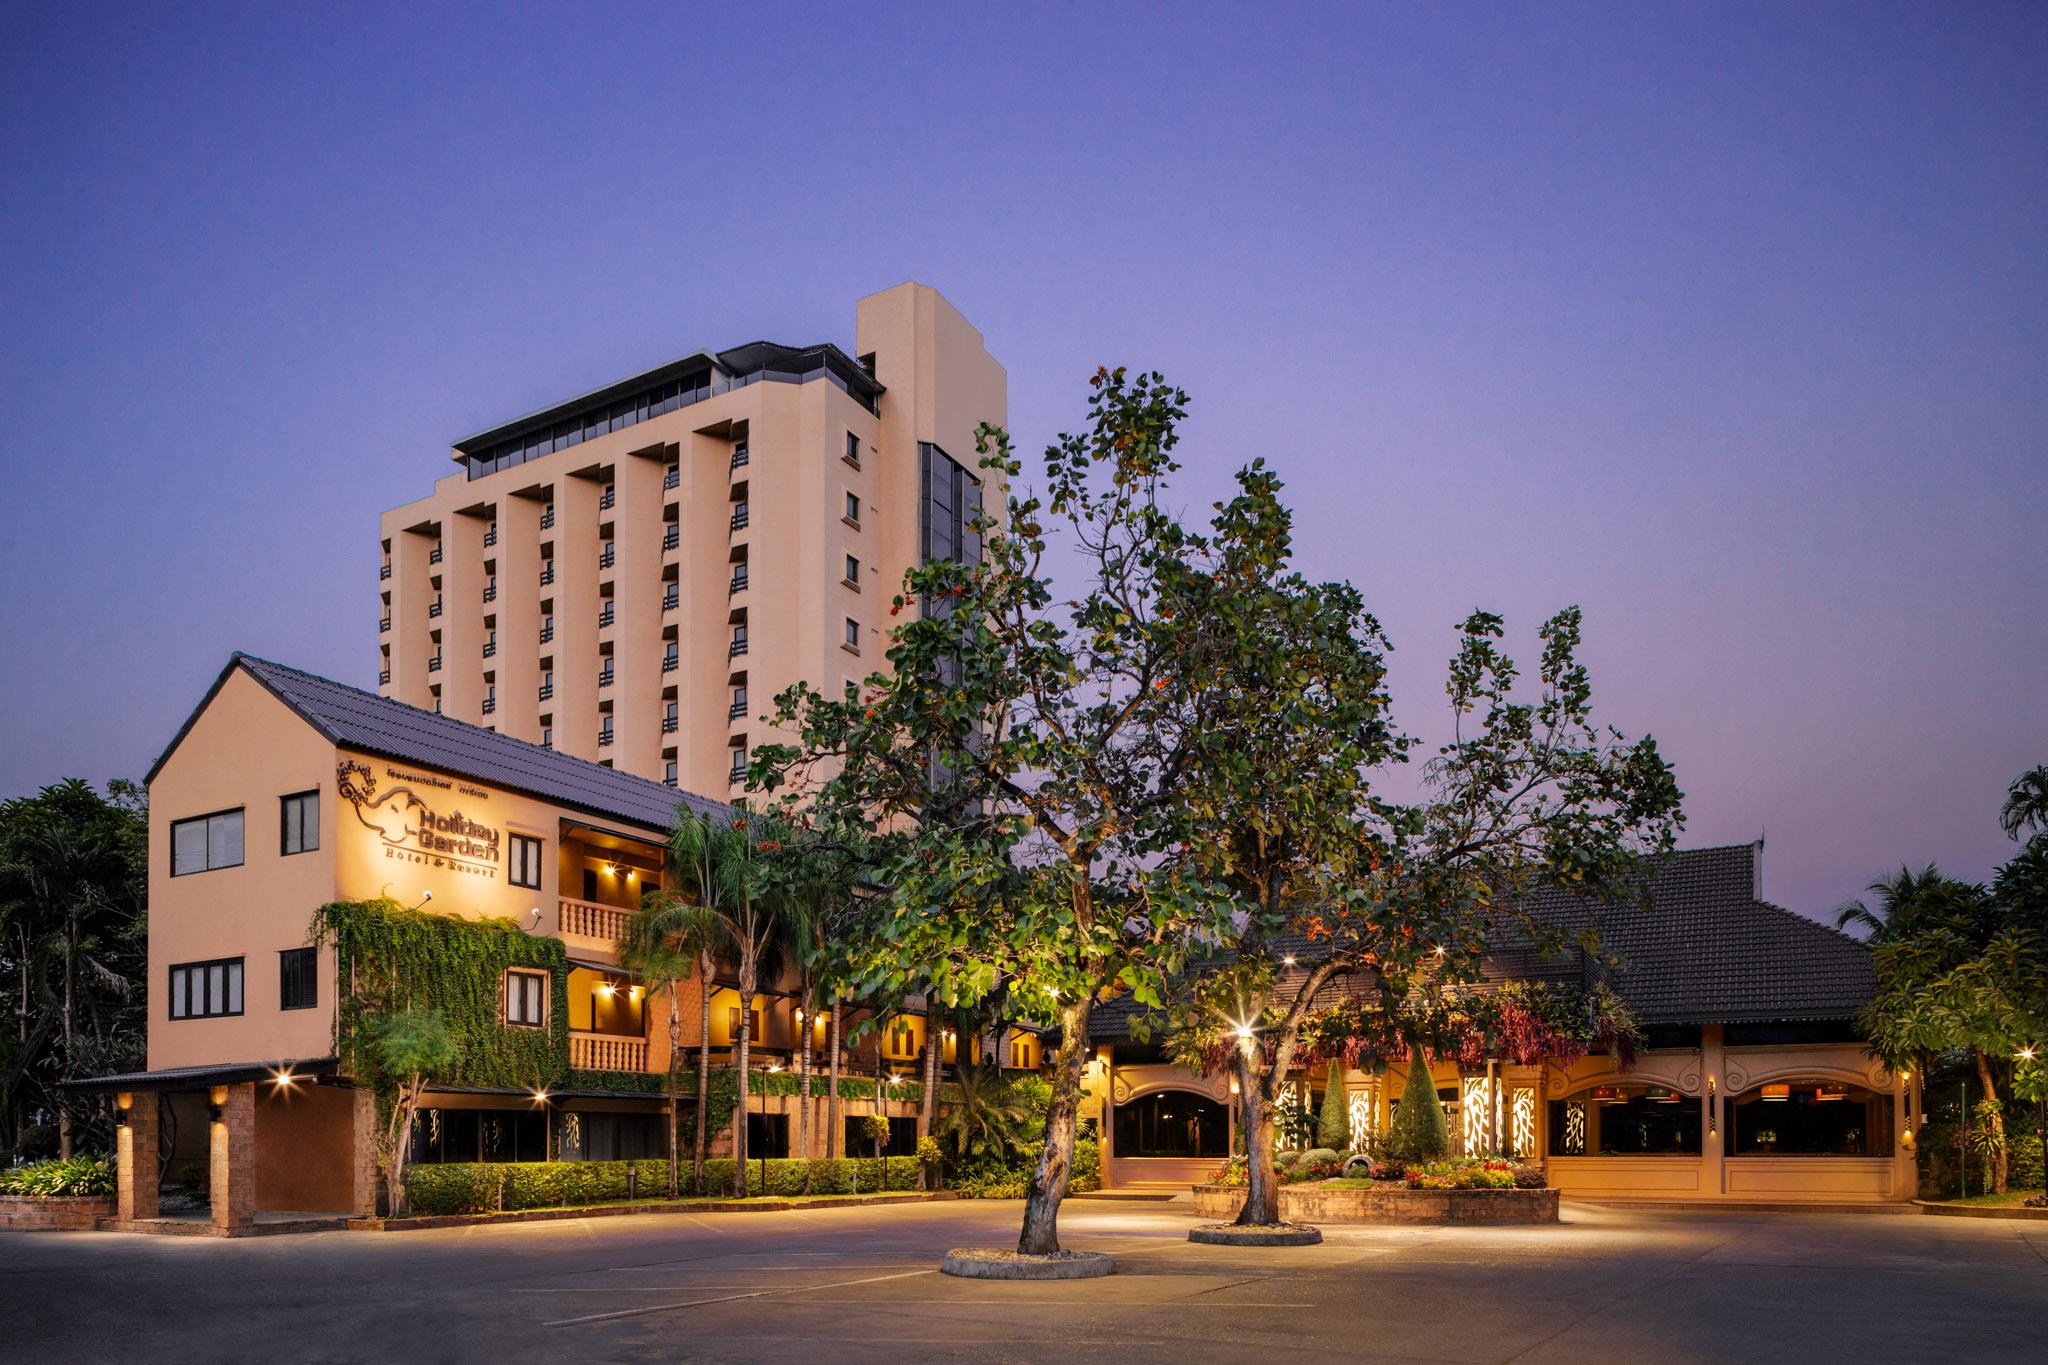 Holiday Garden Hotel & Resort | Hotel building night view